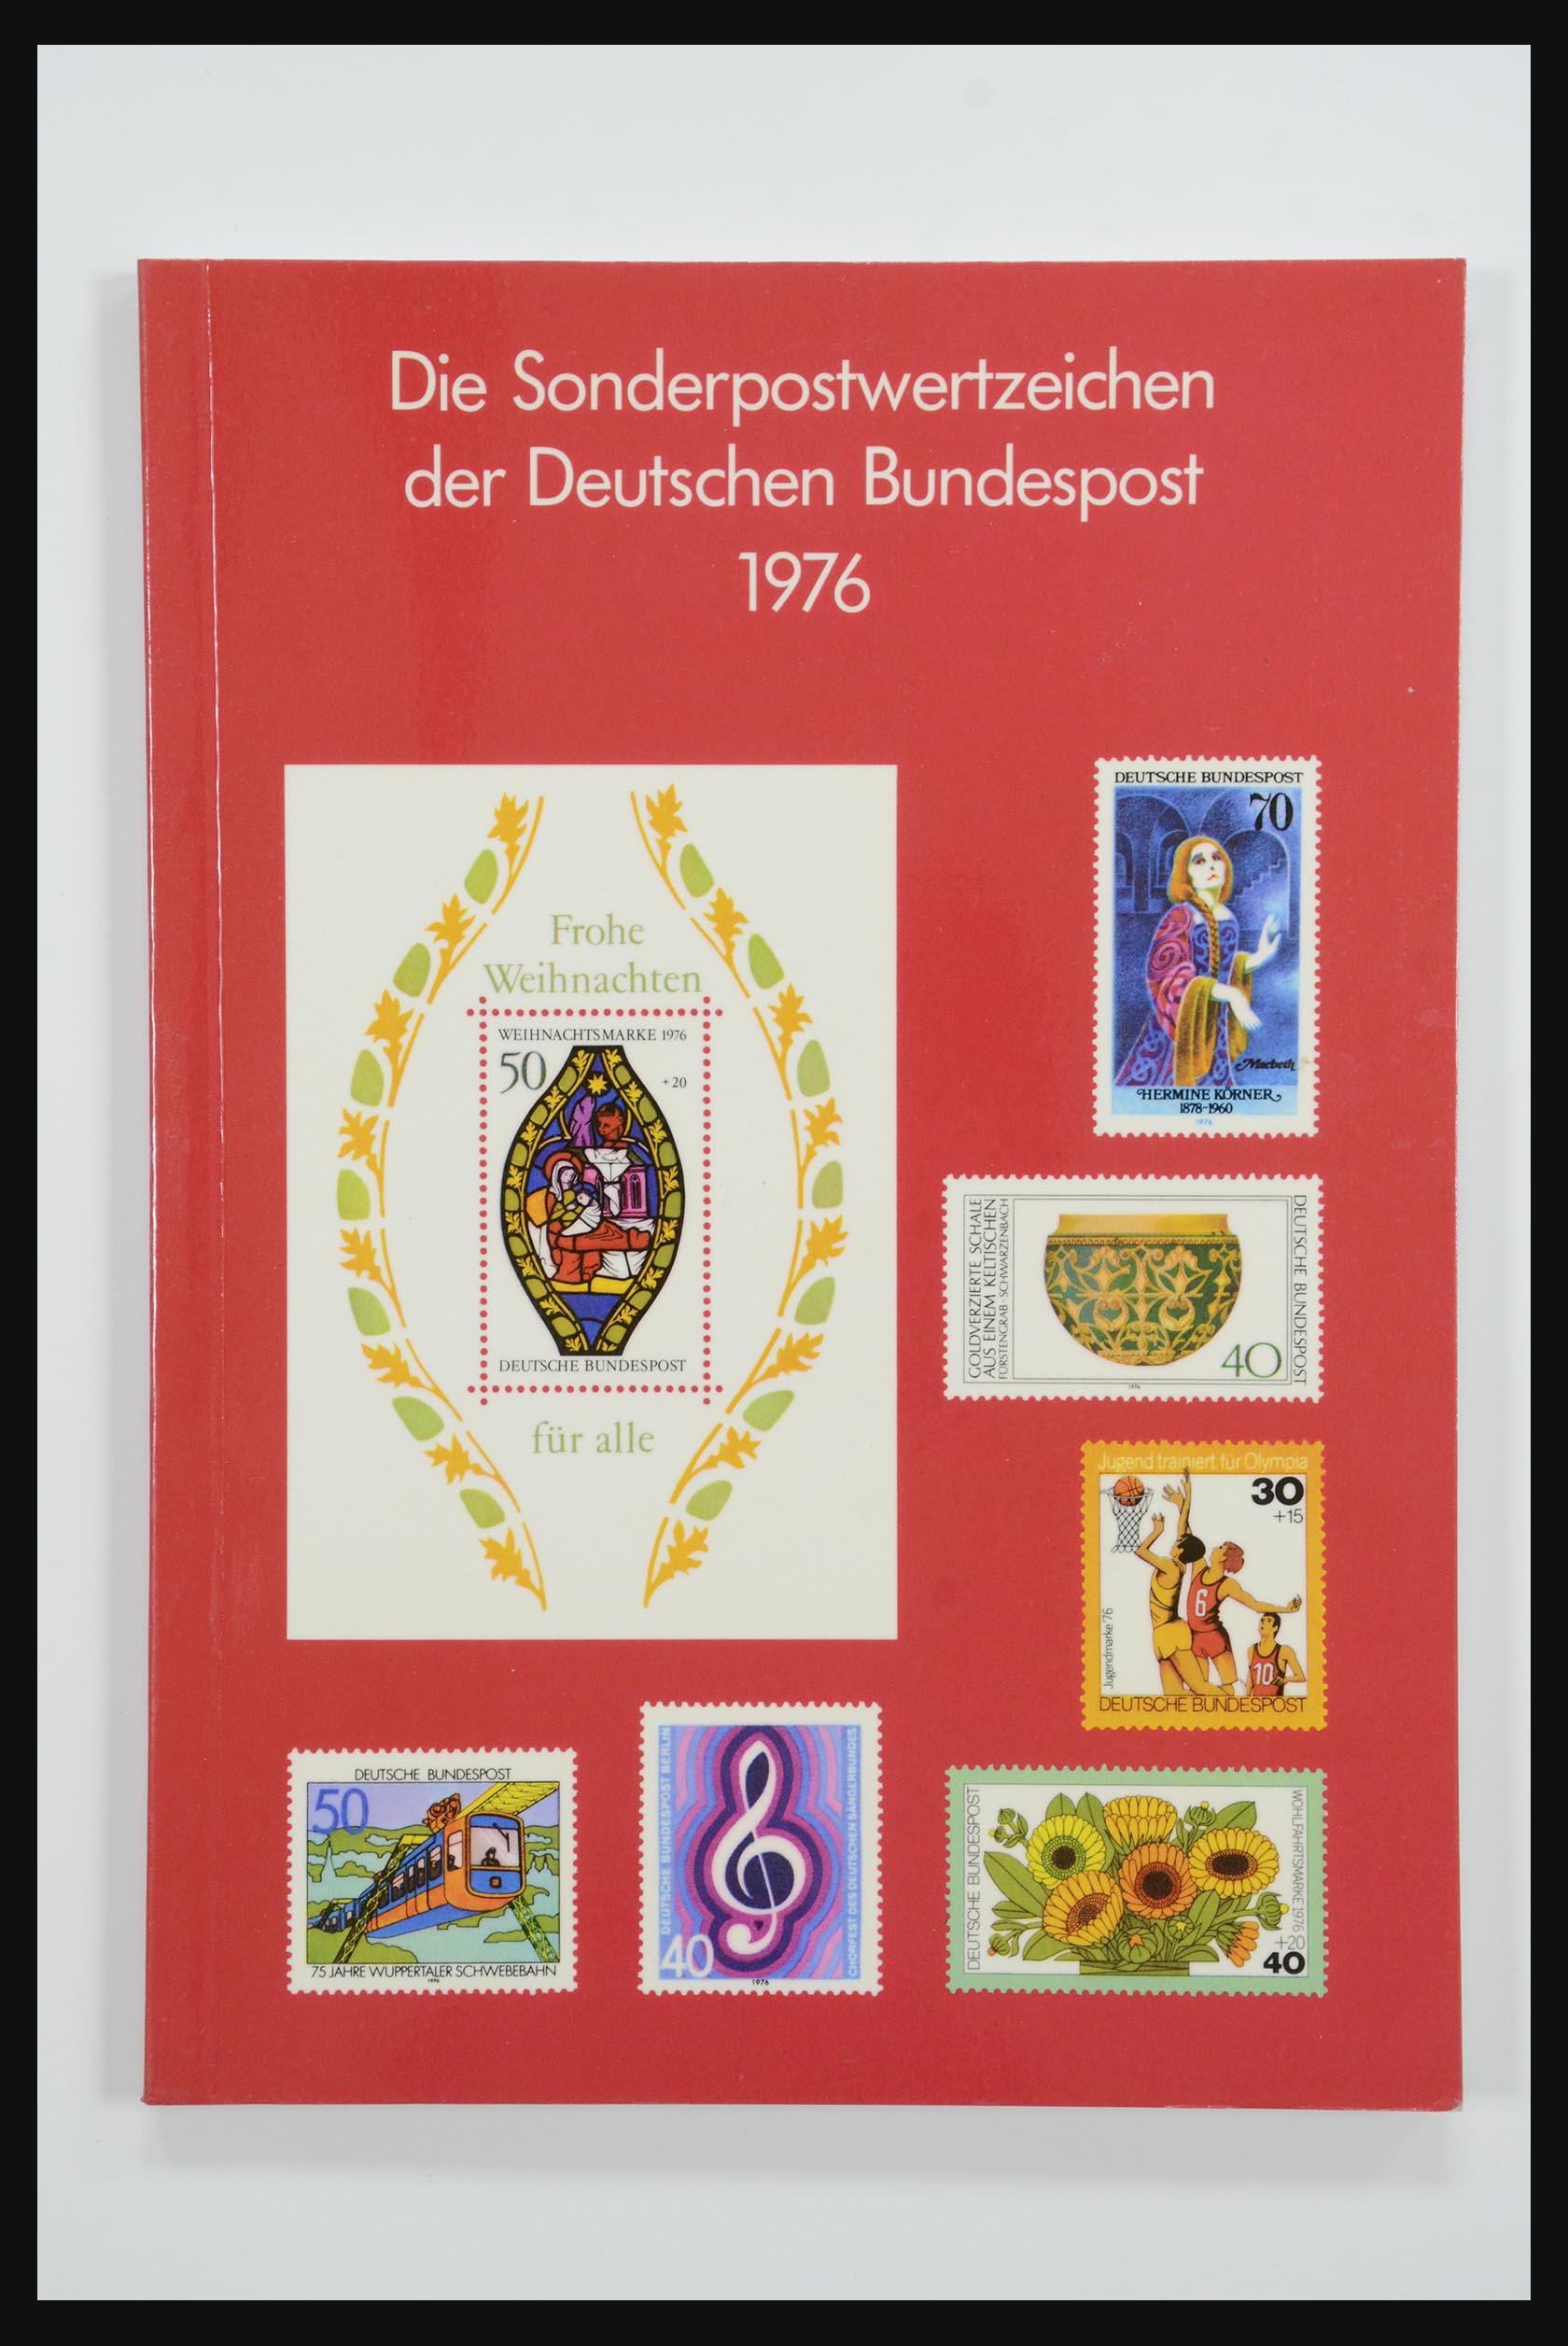 31836 004 - 31836 Bundespost yearbooks 1974-1999.